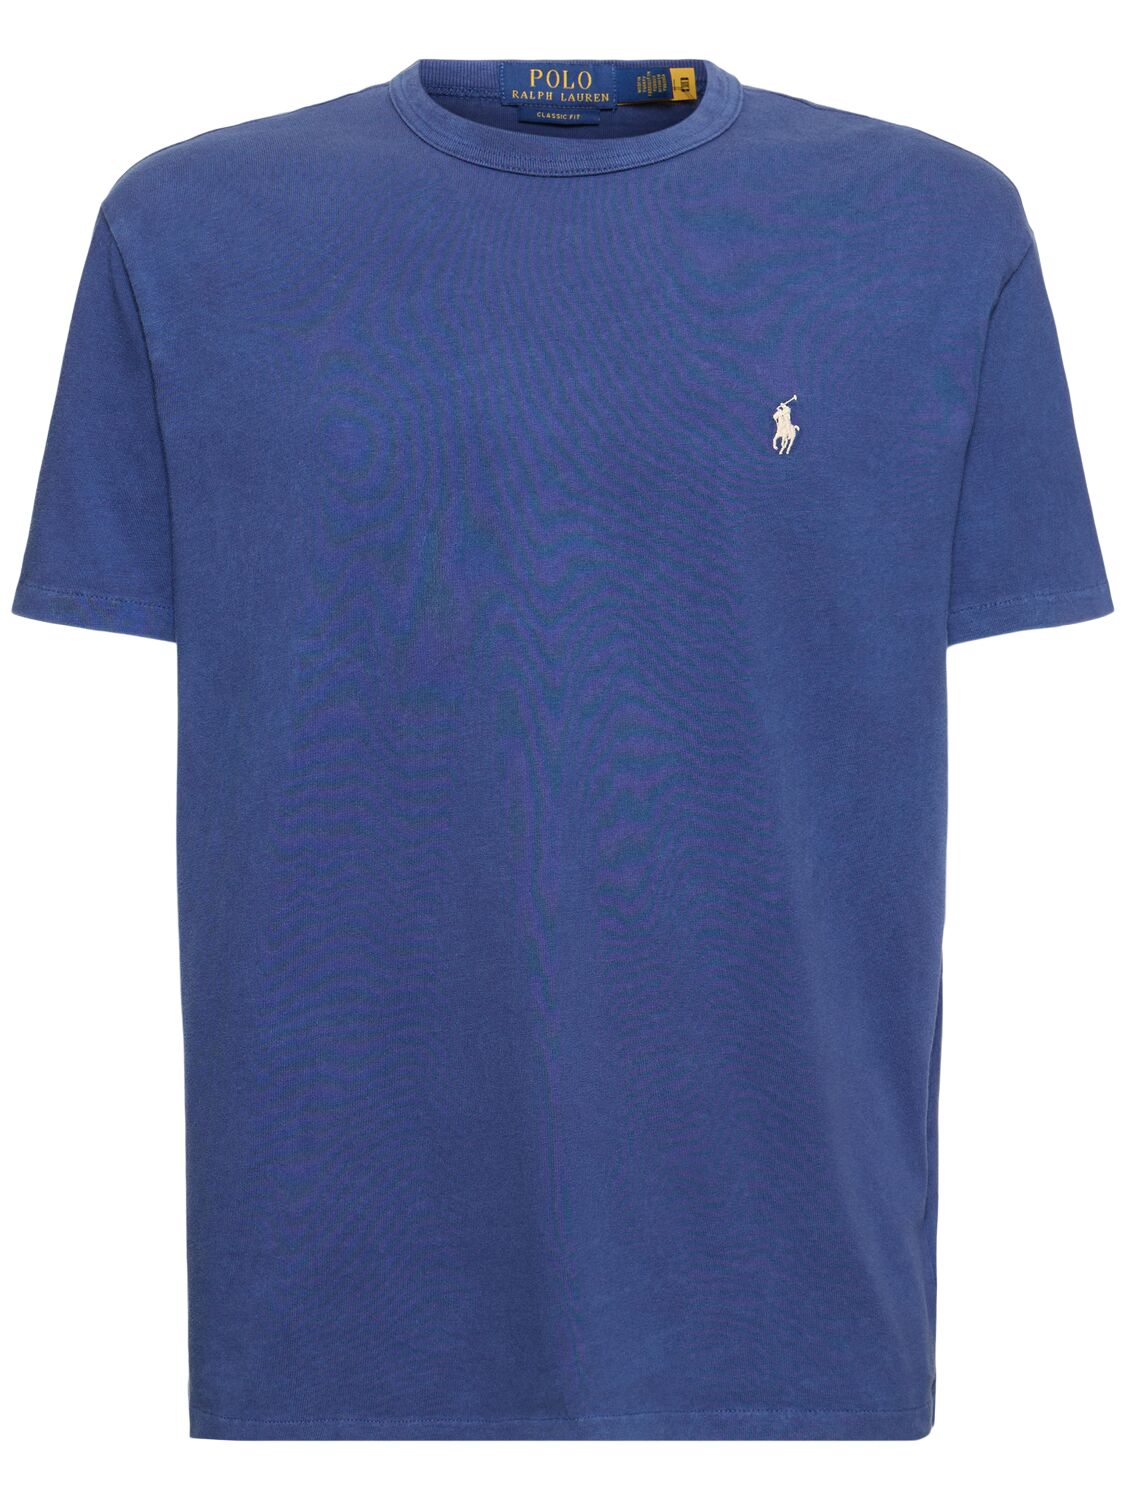 Image of Dragon Embroidery Polo T-shirt